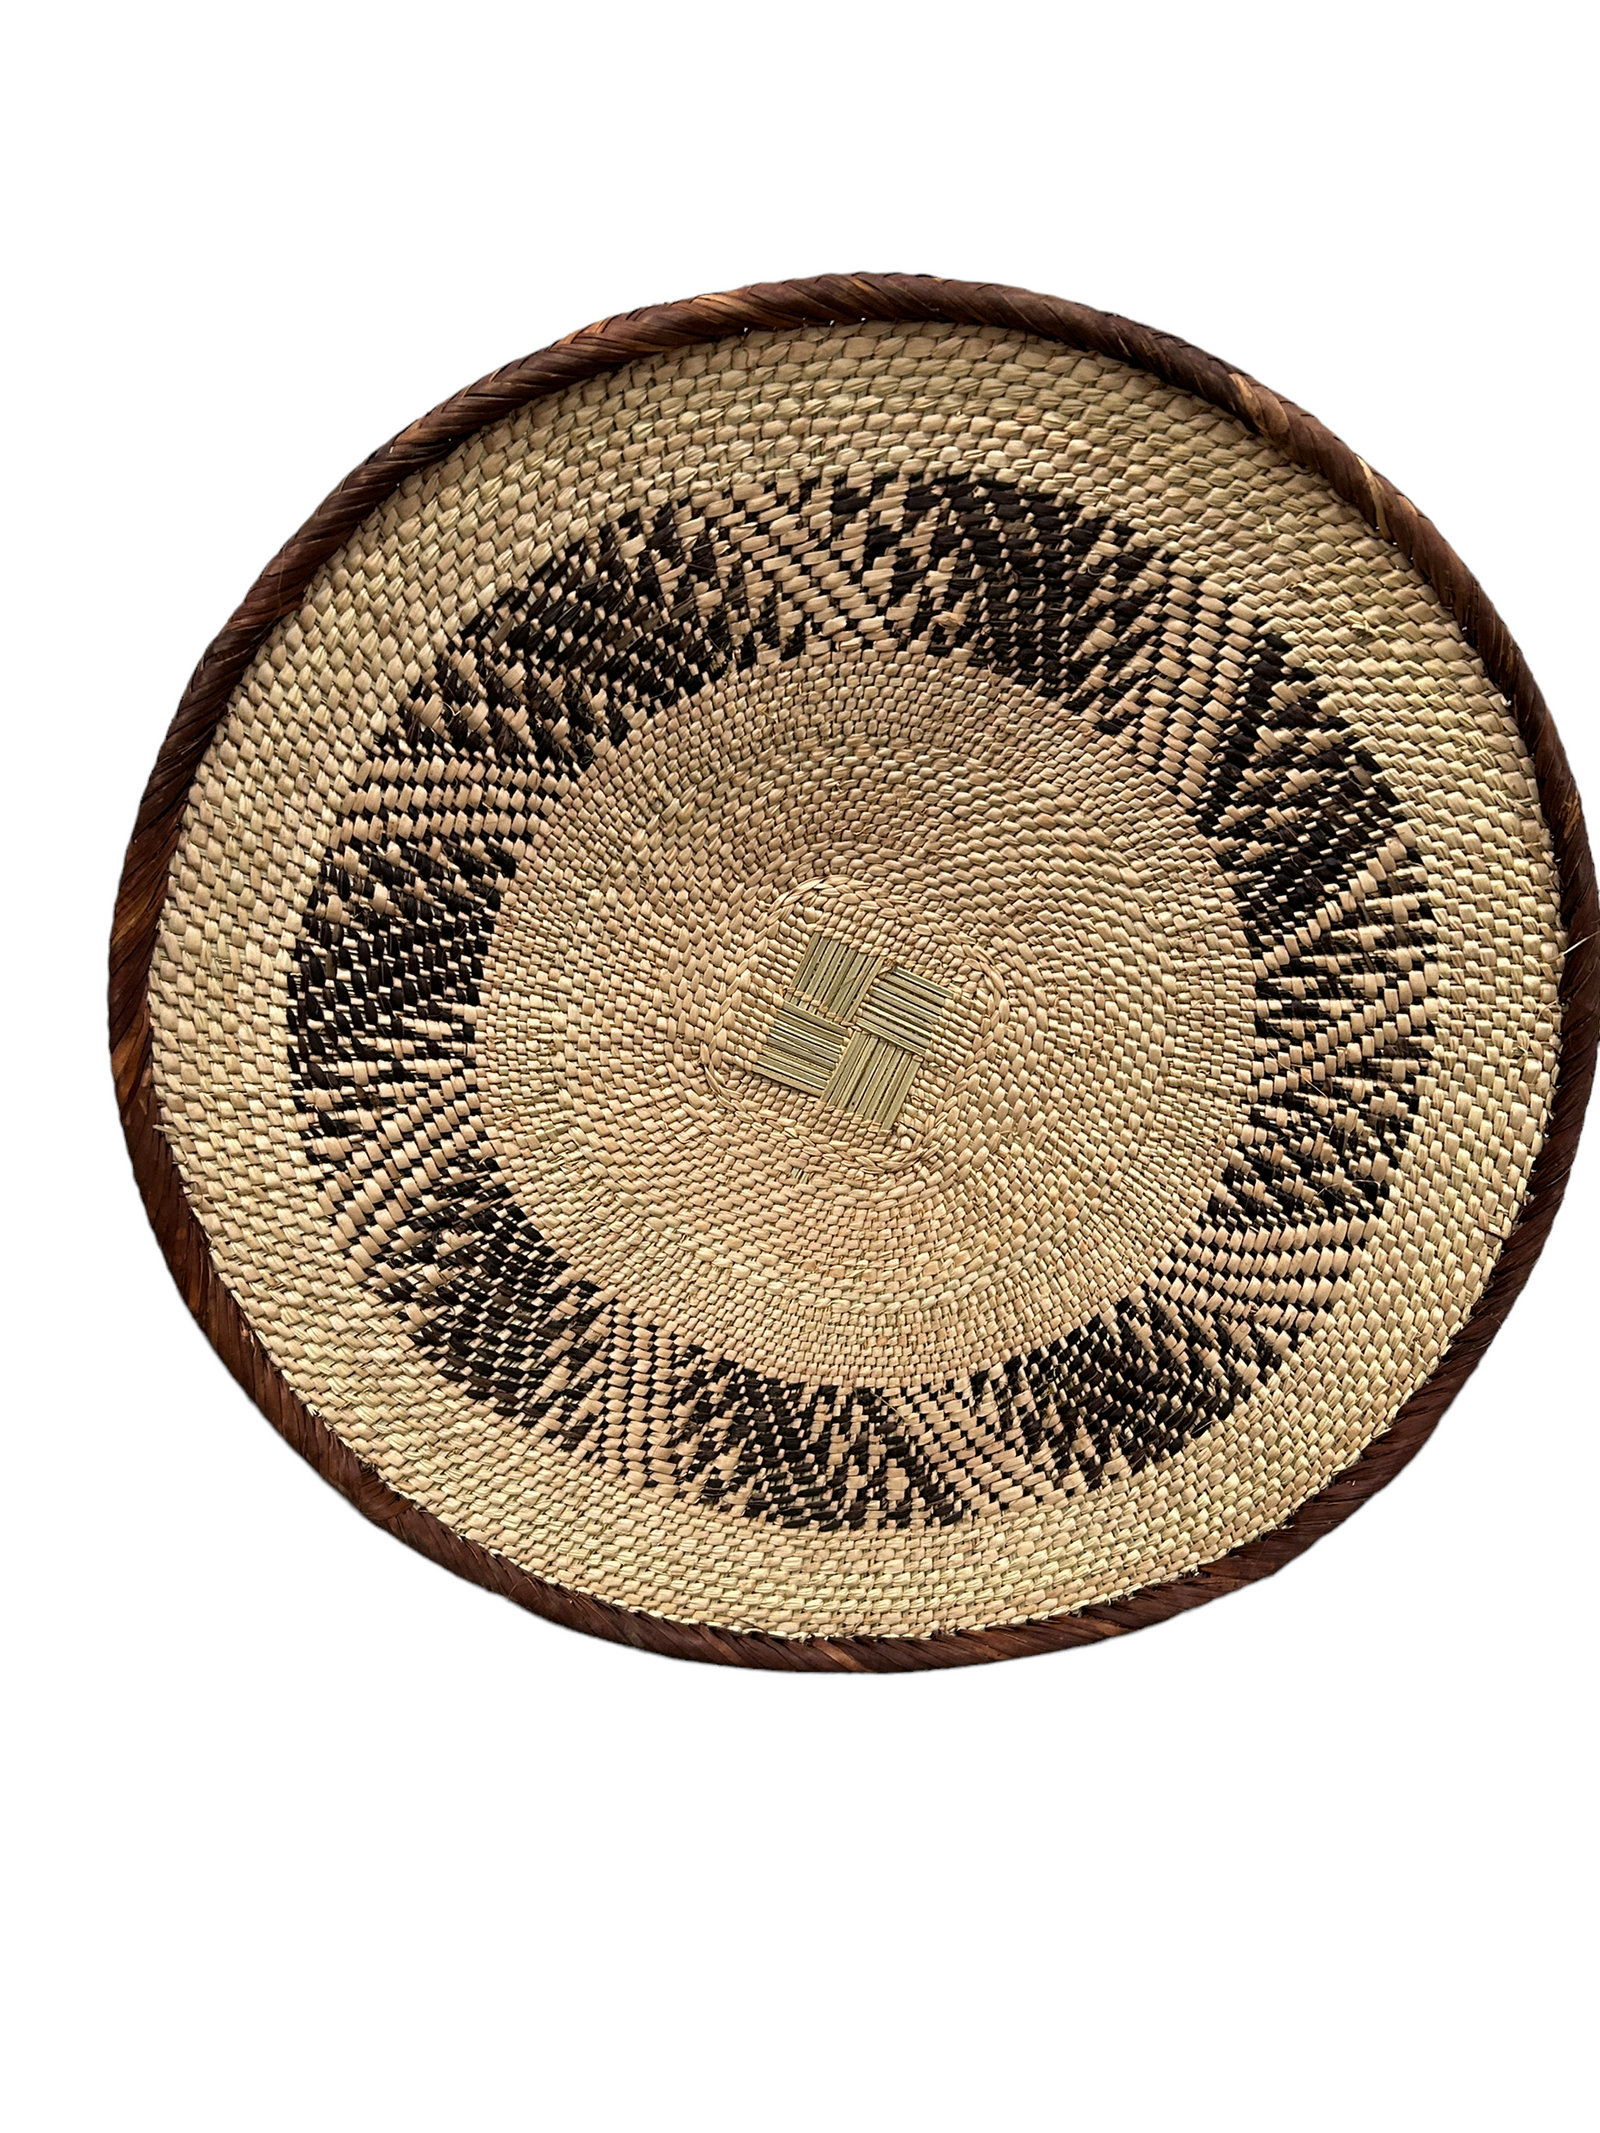 Tonga Basket Natural (47-05)